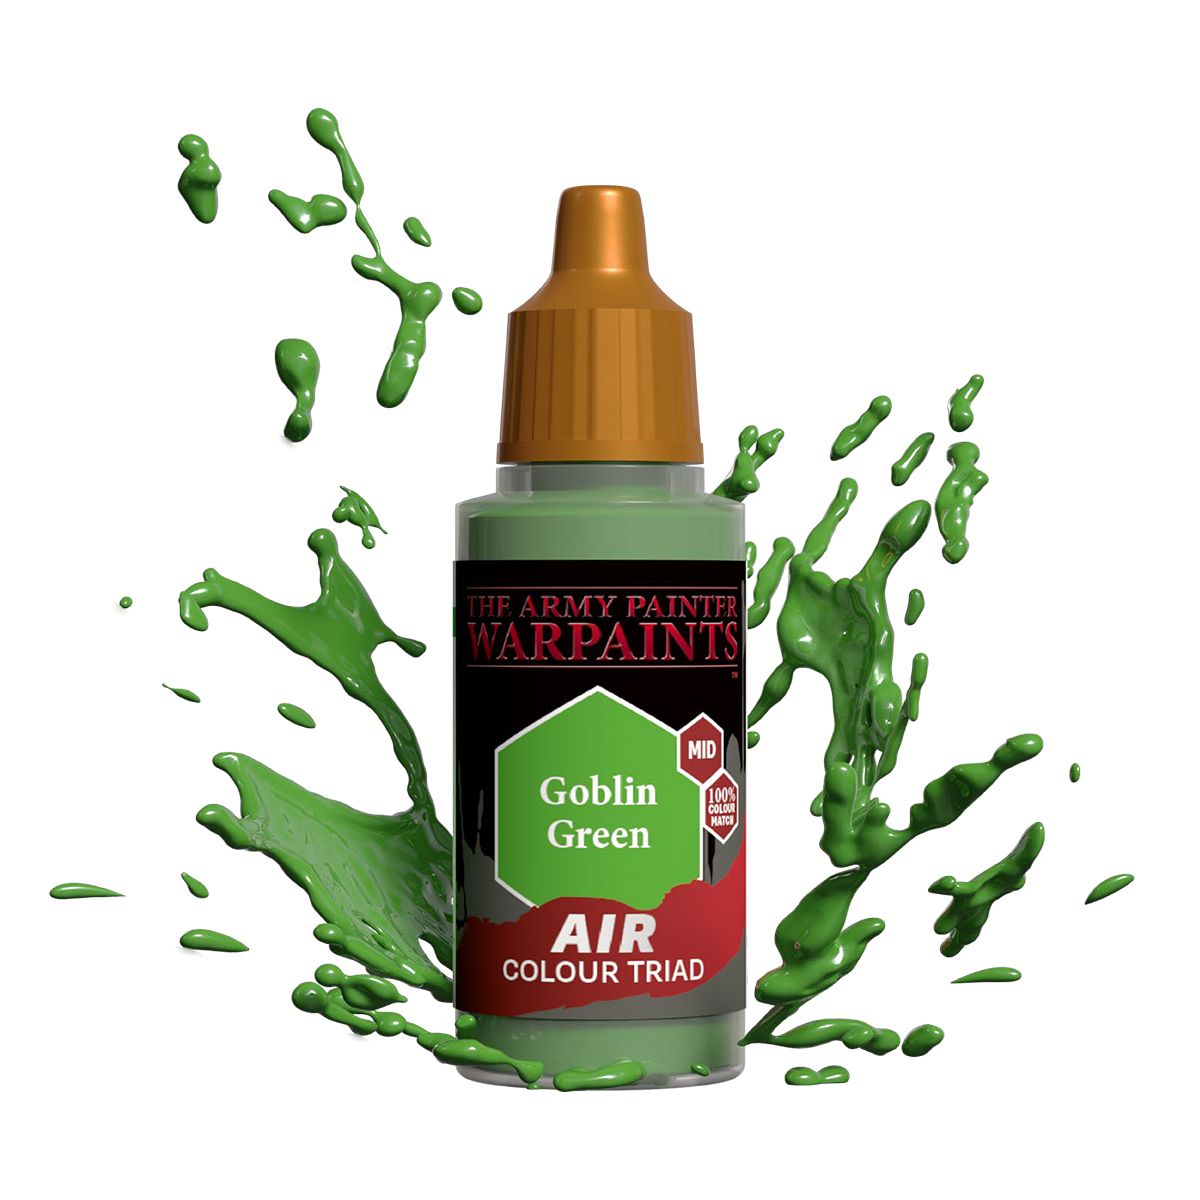 WARPAINTS AIR GOBLIN GREEN